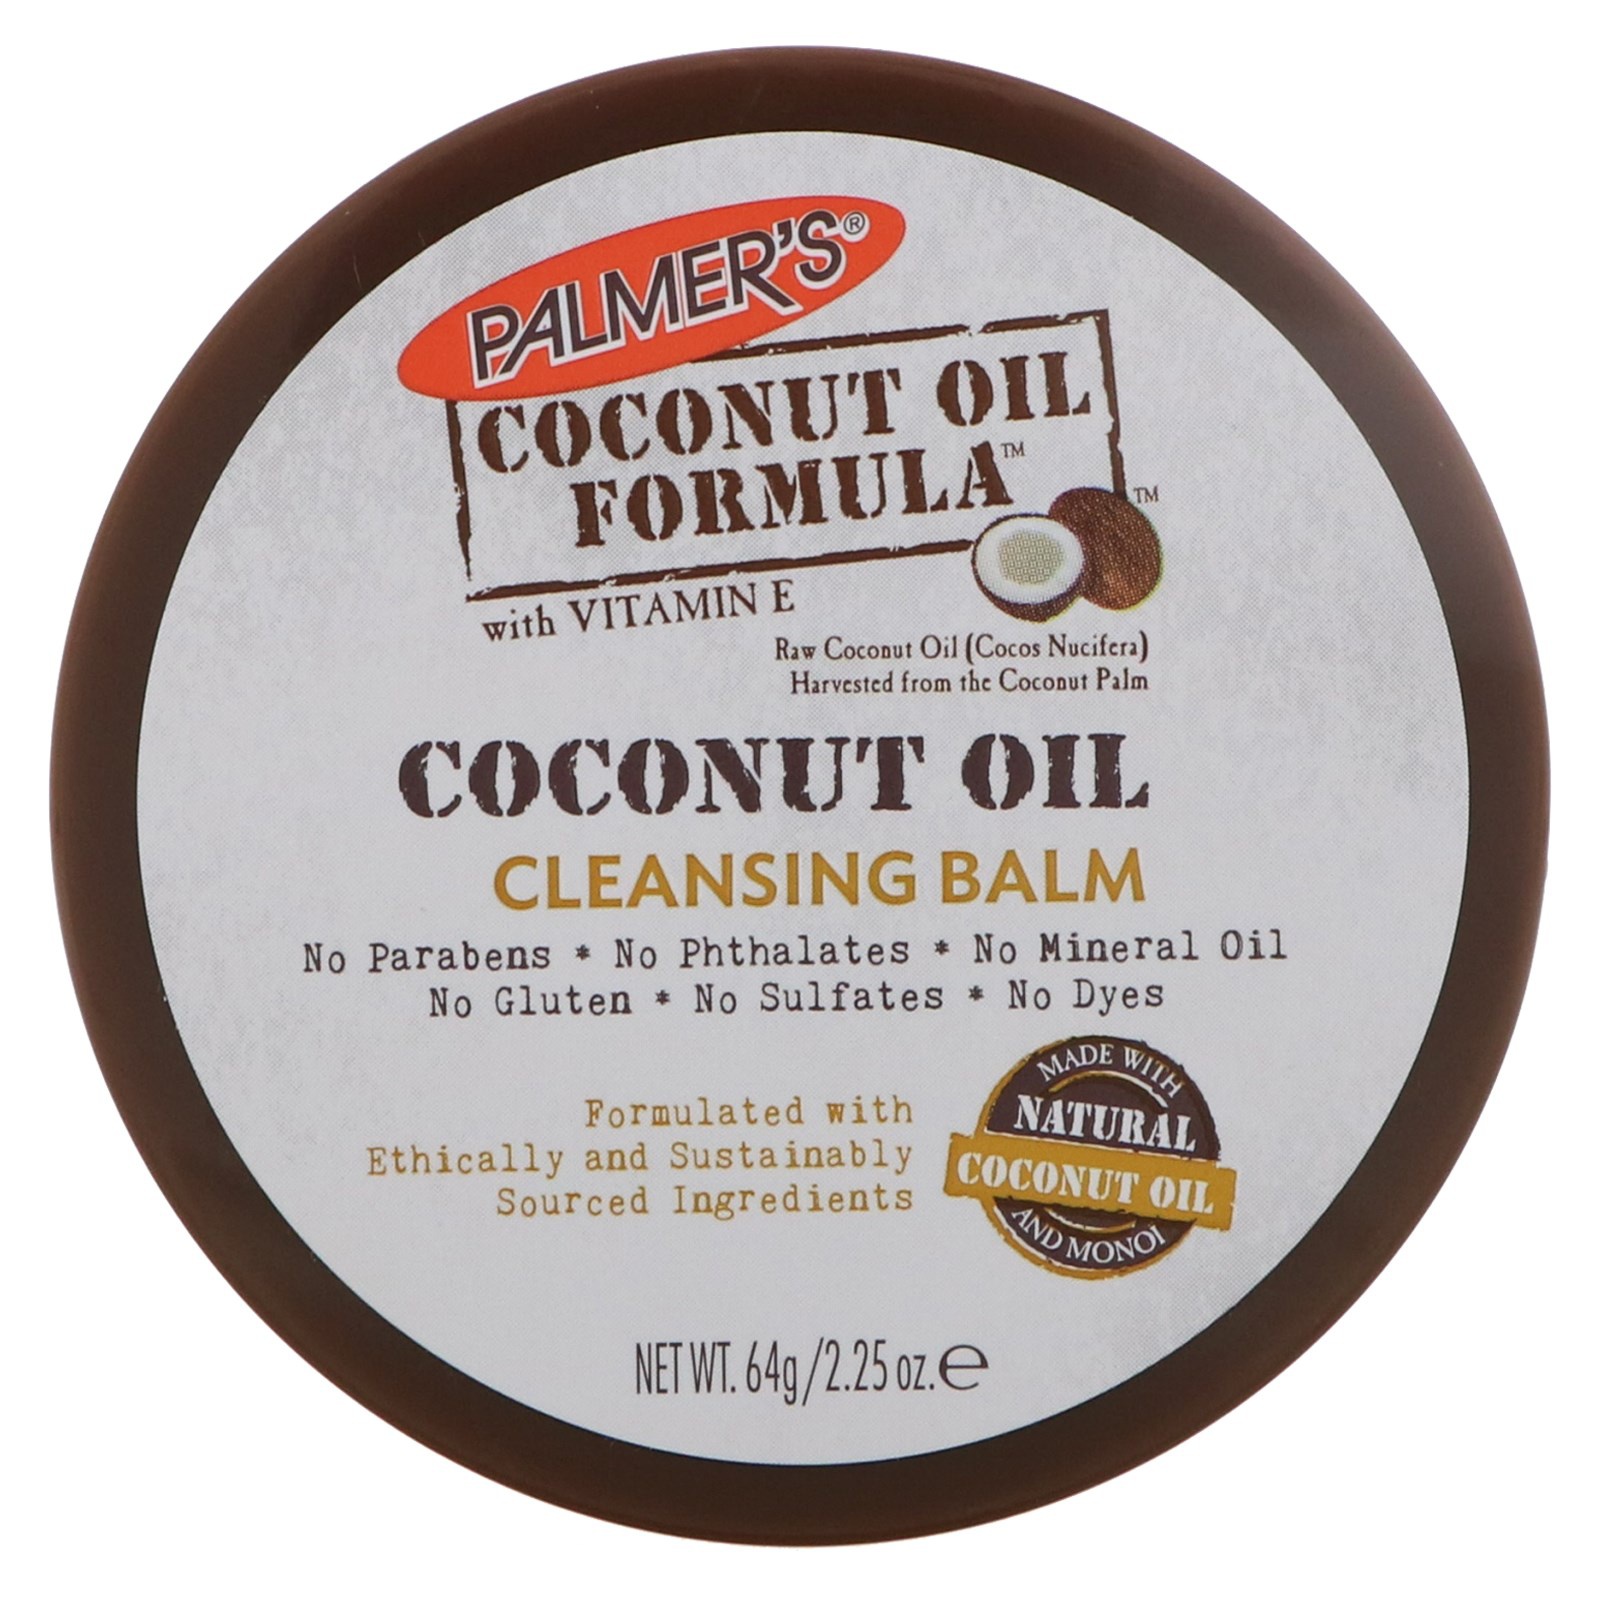 Palmer's Coconut Oil Formula Cleansing Balm